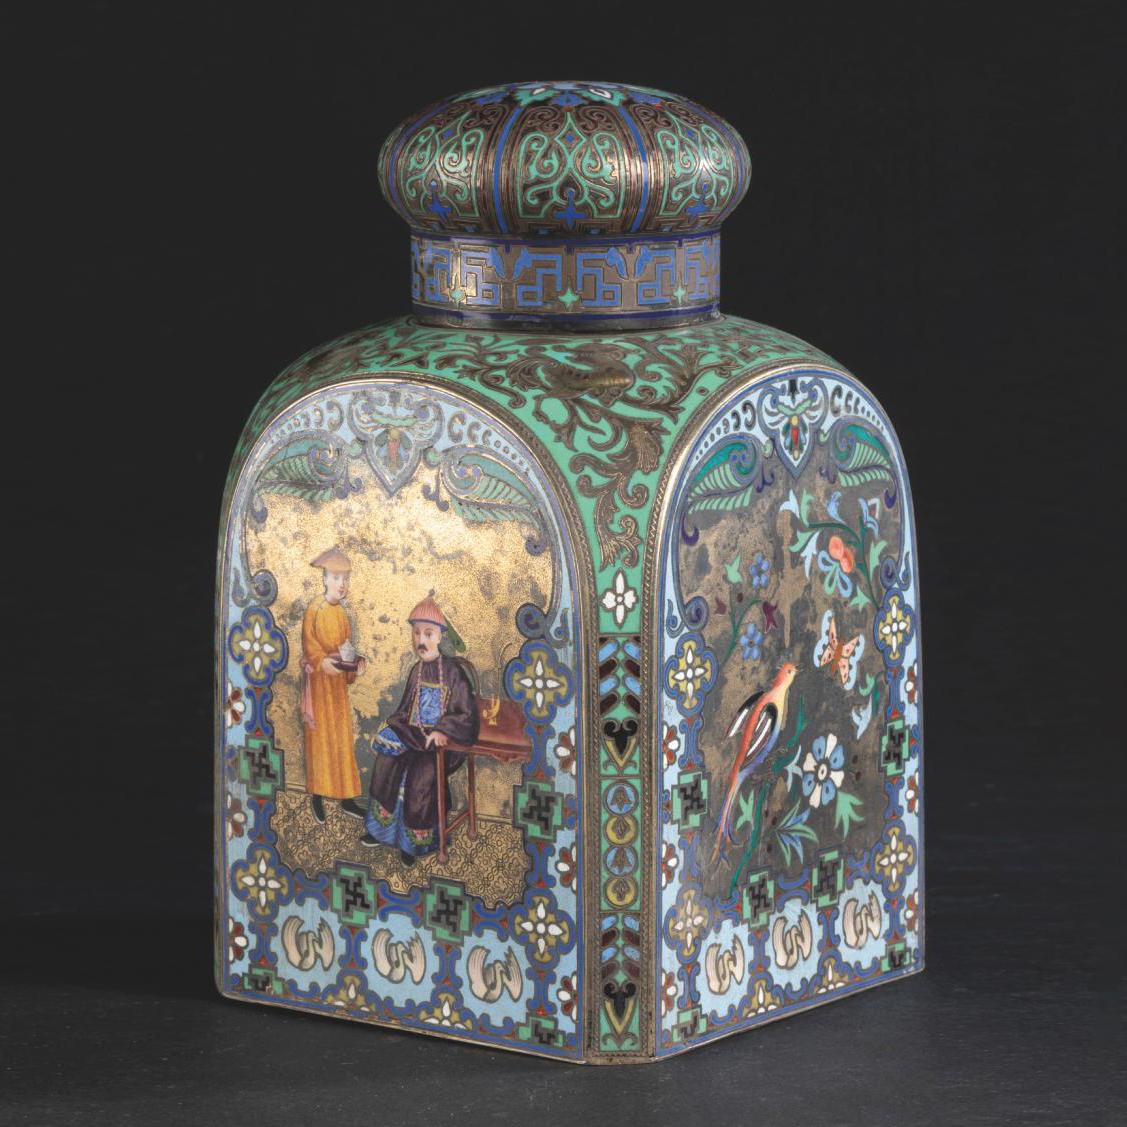 Pavel Ovchinnikov's Tea Box for a Tsar  - Lots sold